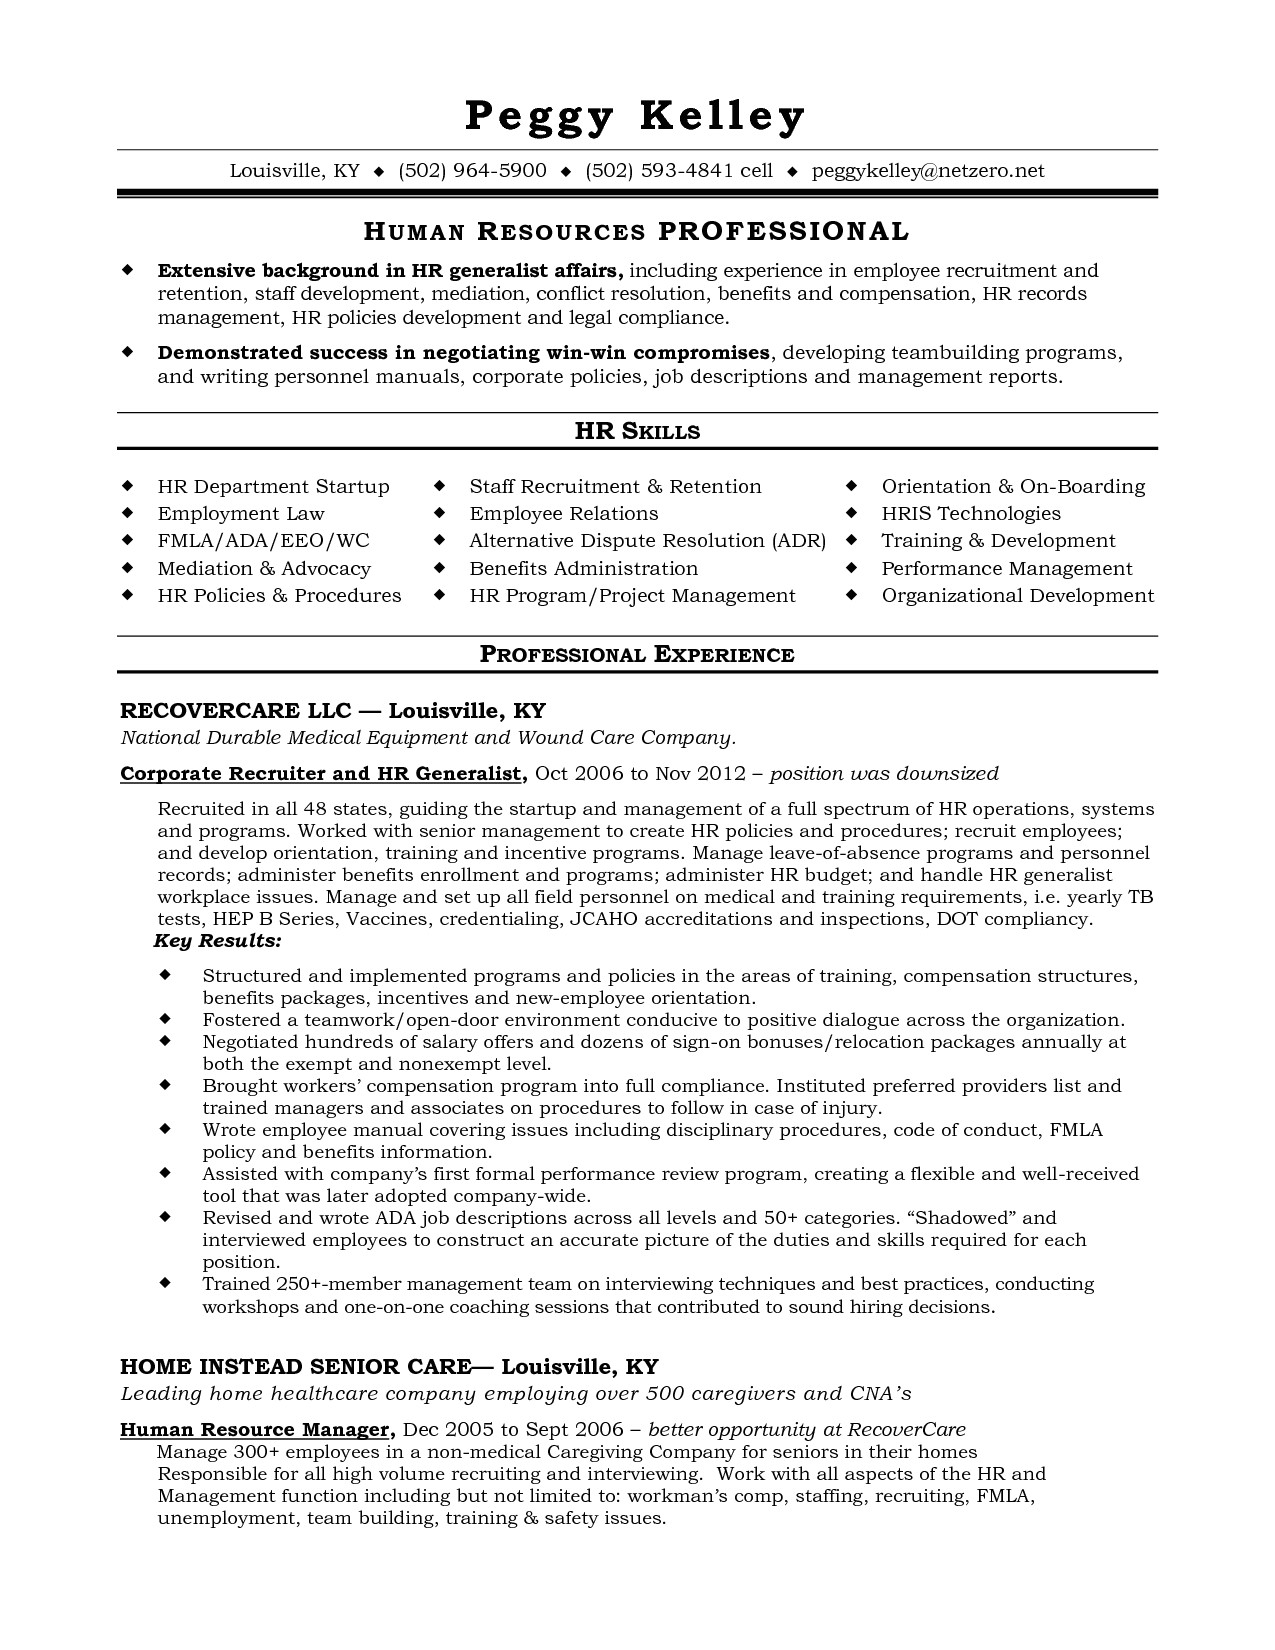 technical recruiter resume summary